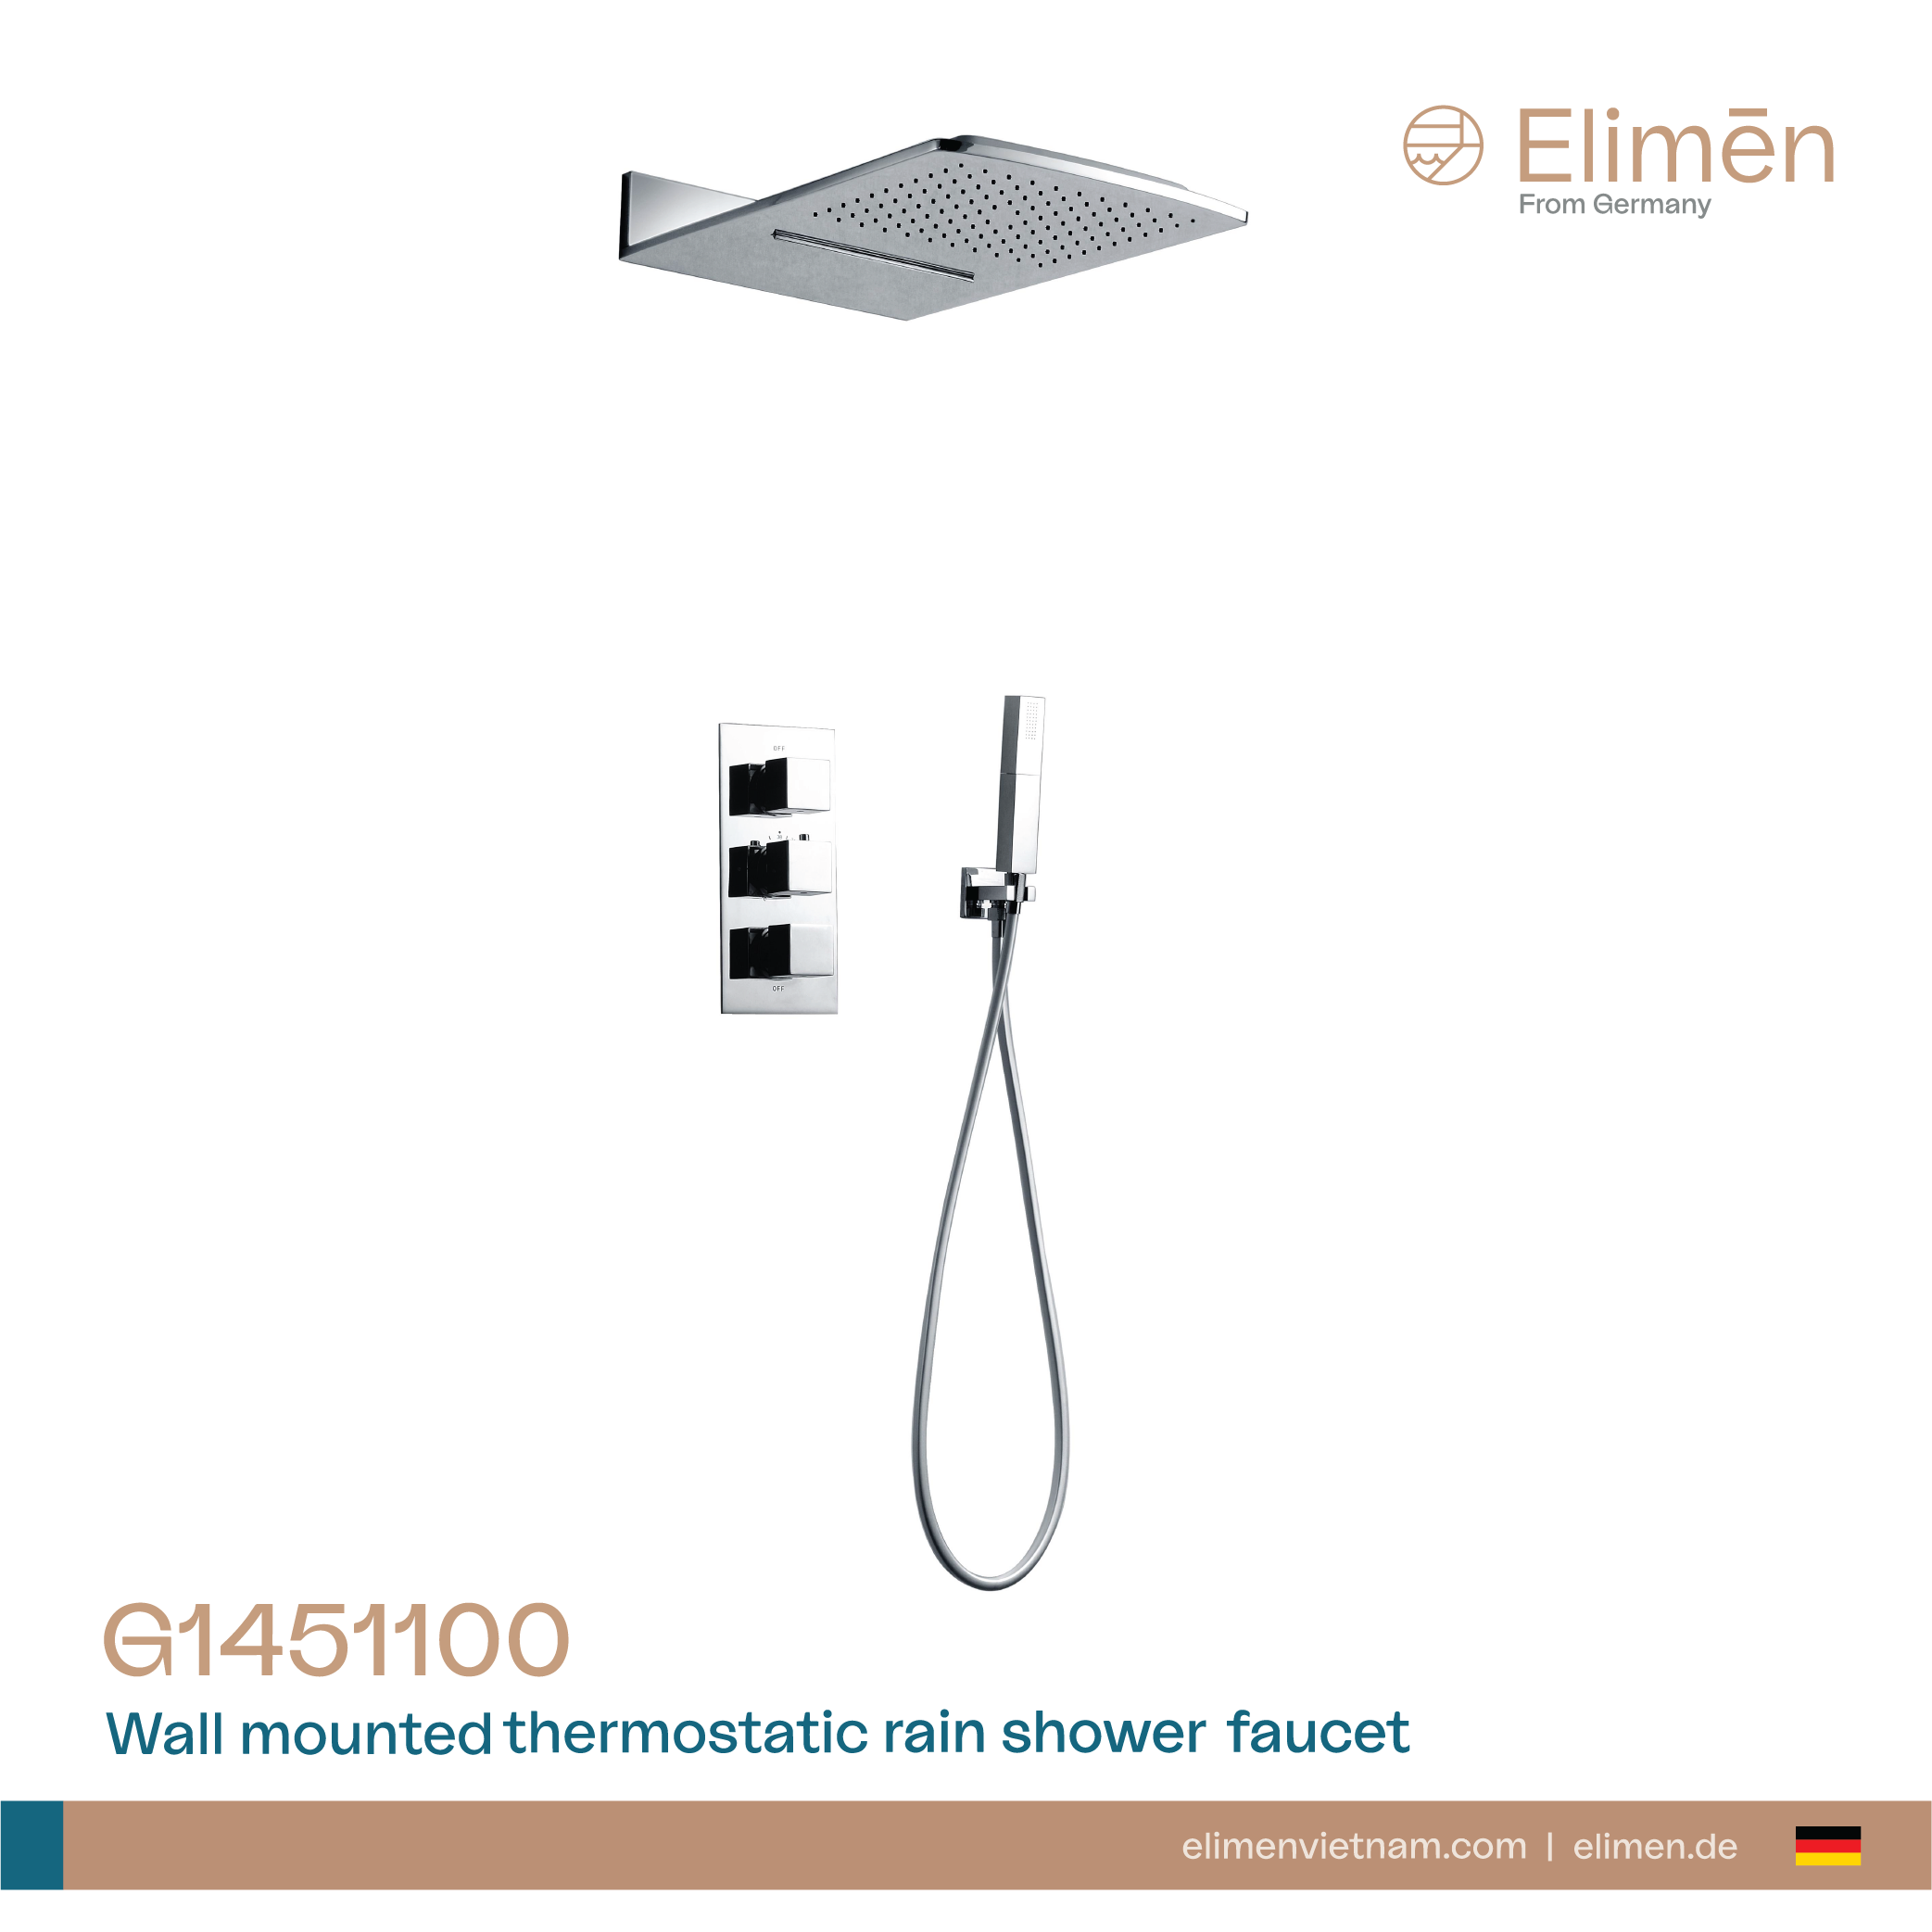 Elimen wall mounted shower - Code G1451100